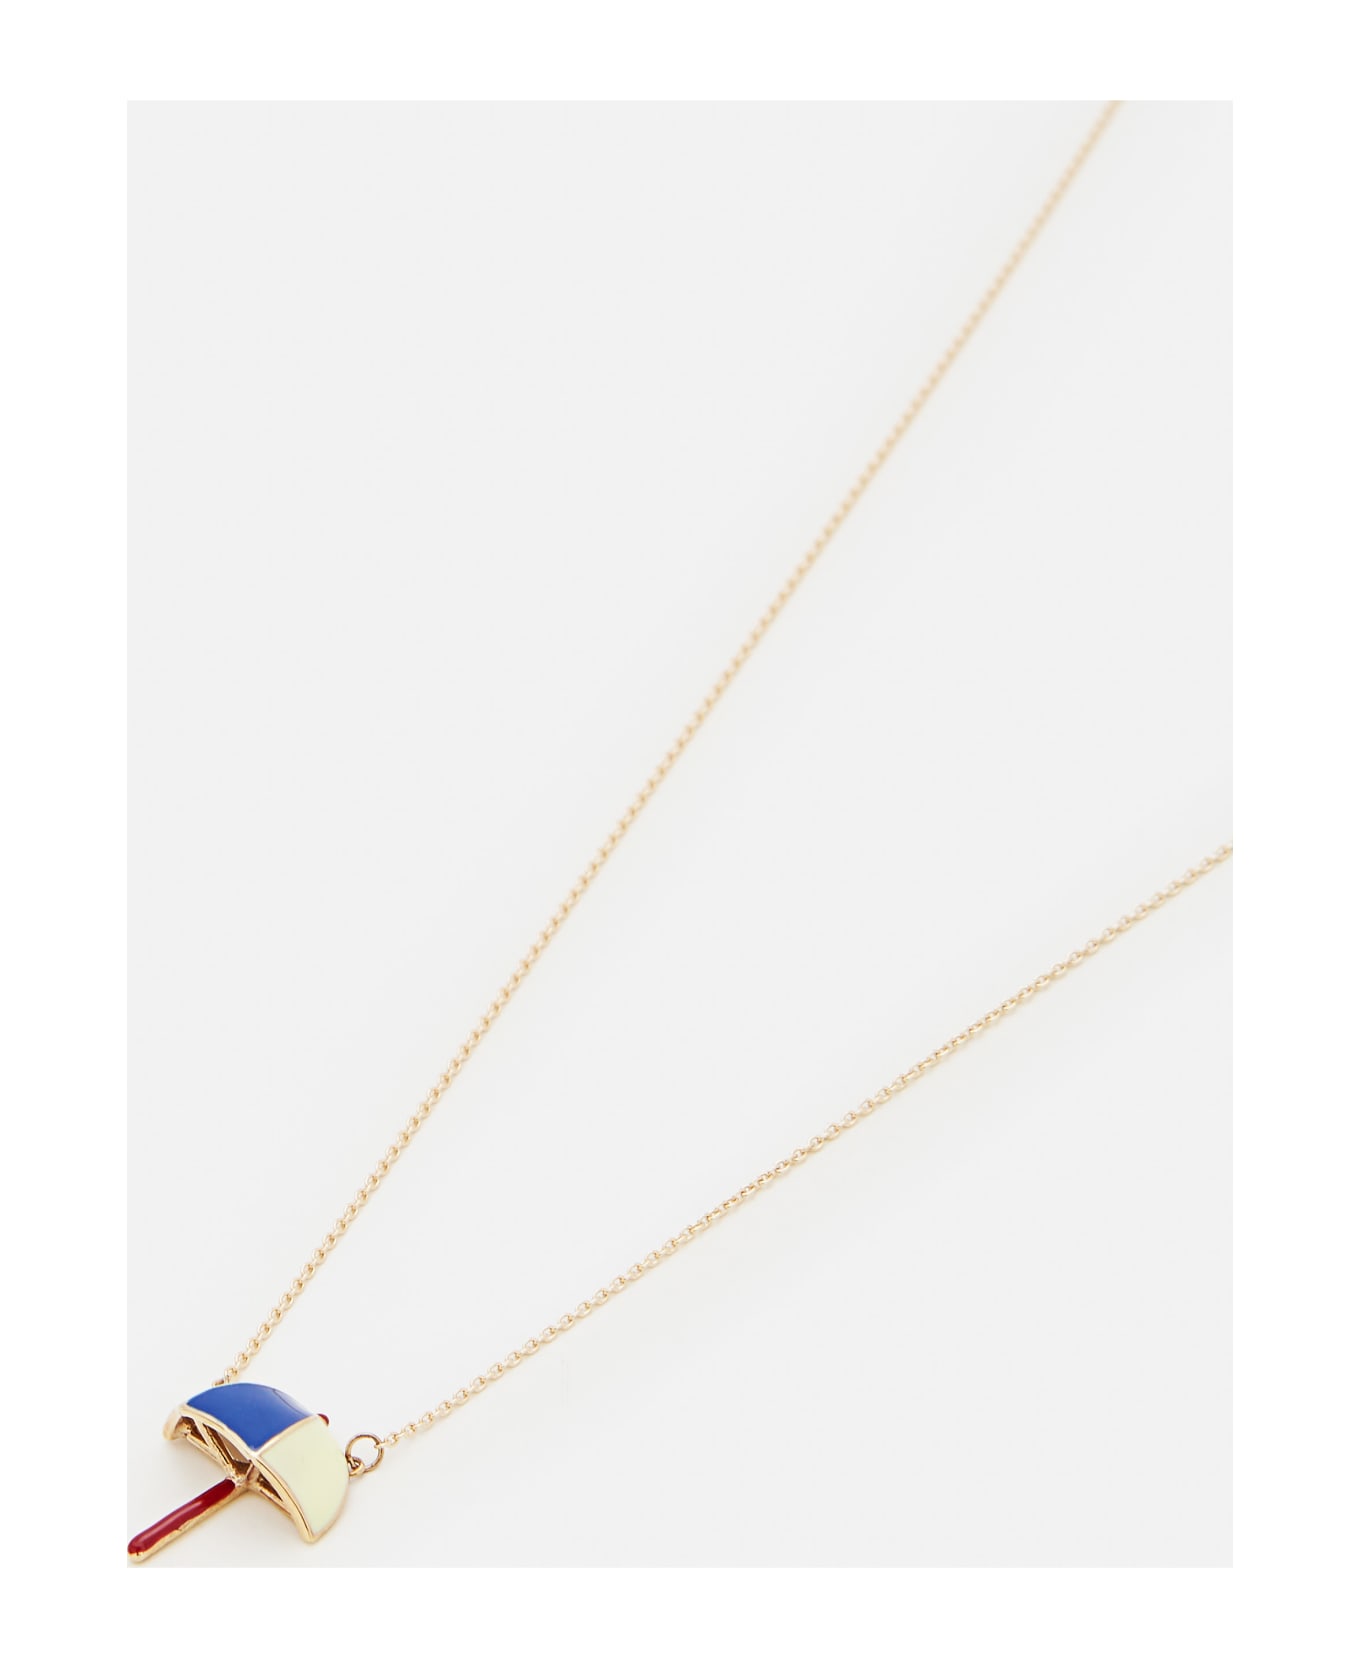 Aliita 9k Gold Sombrilla Enamel Necklace - Blue ネックレス